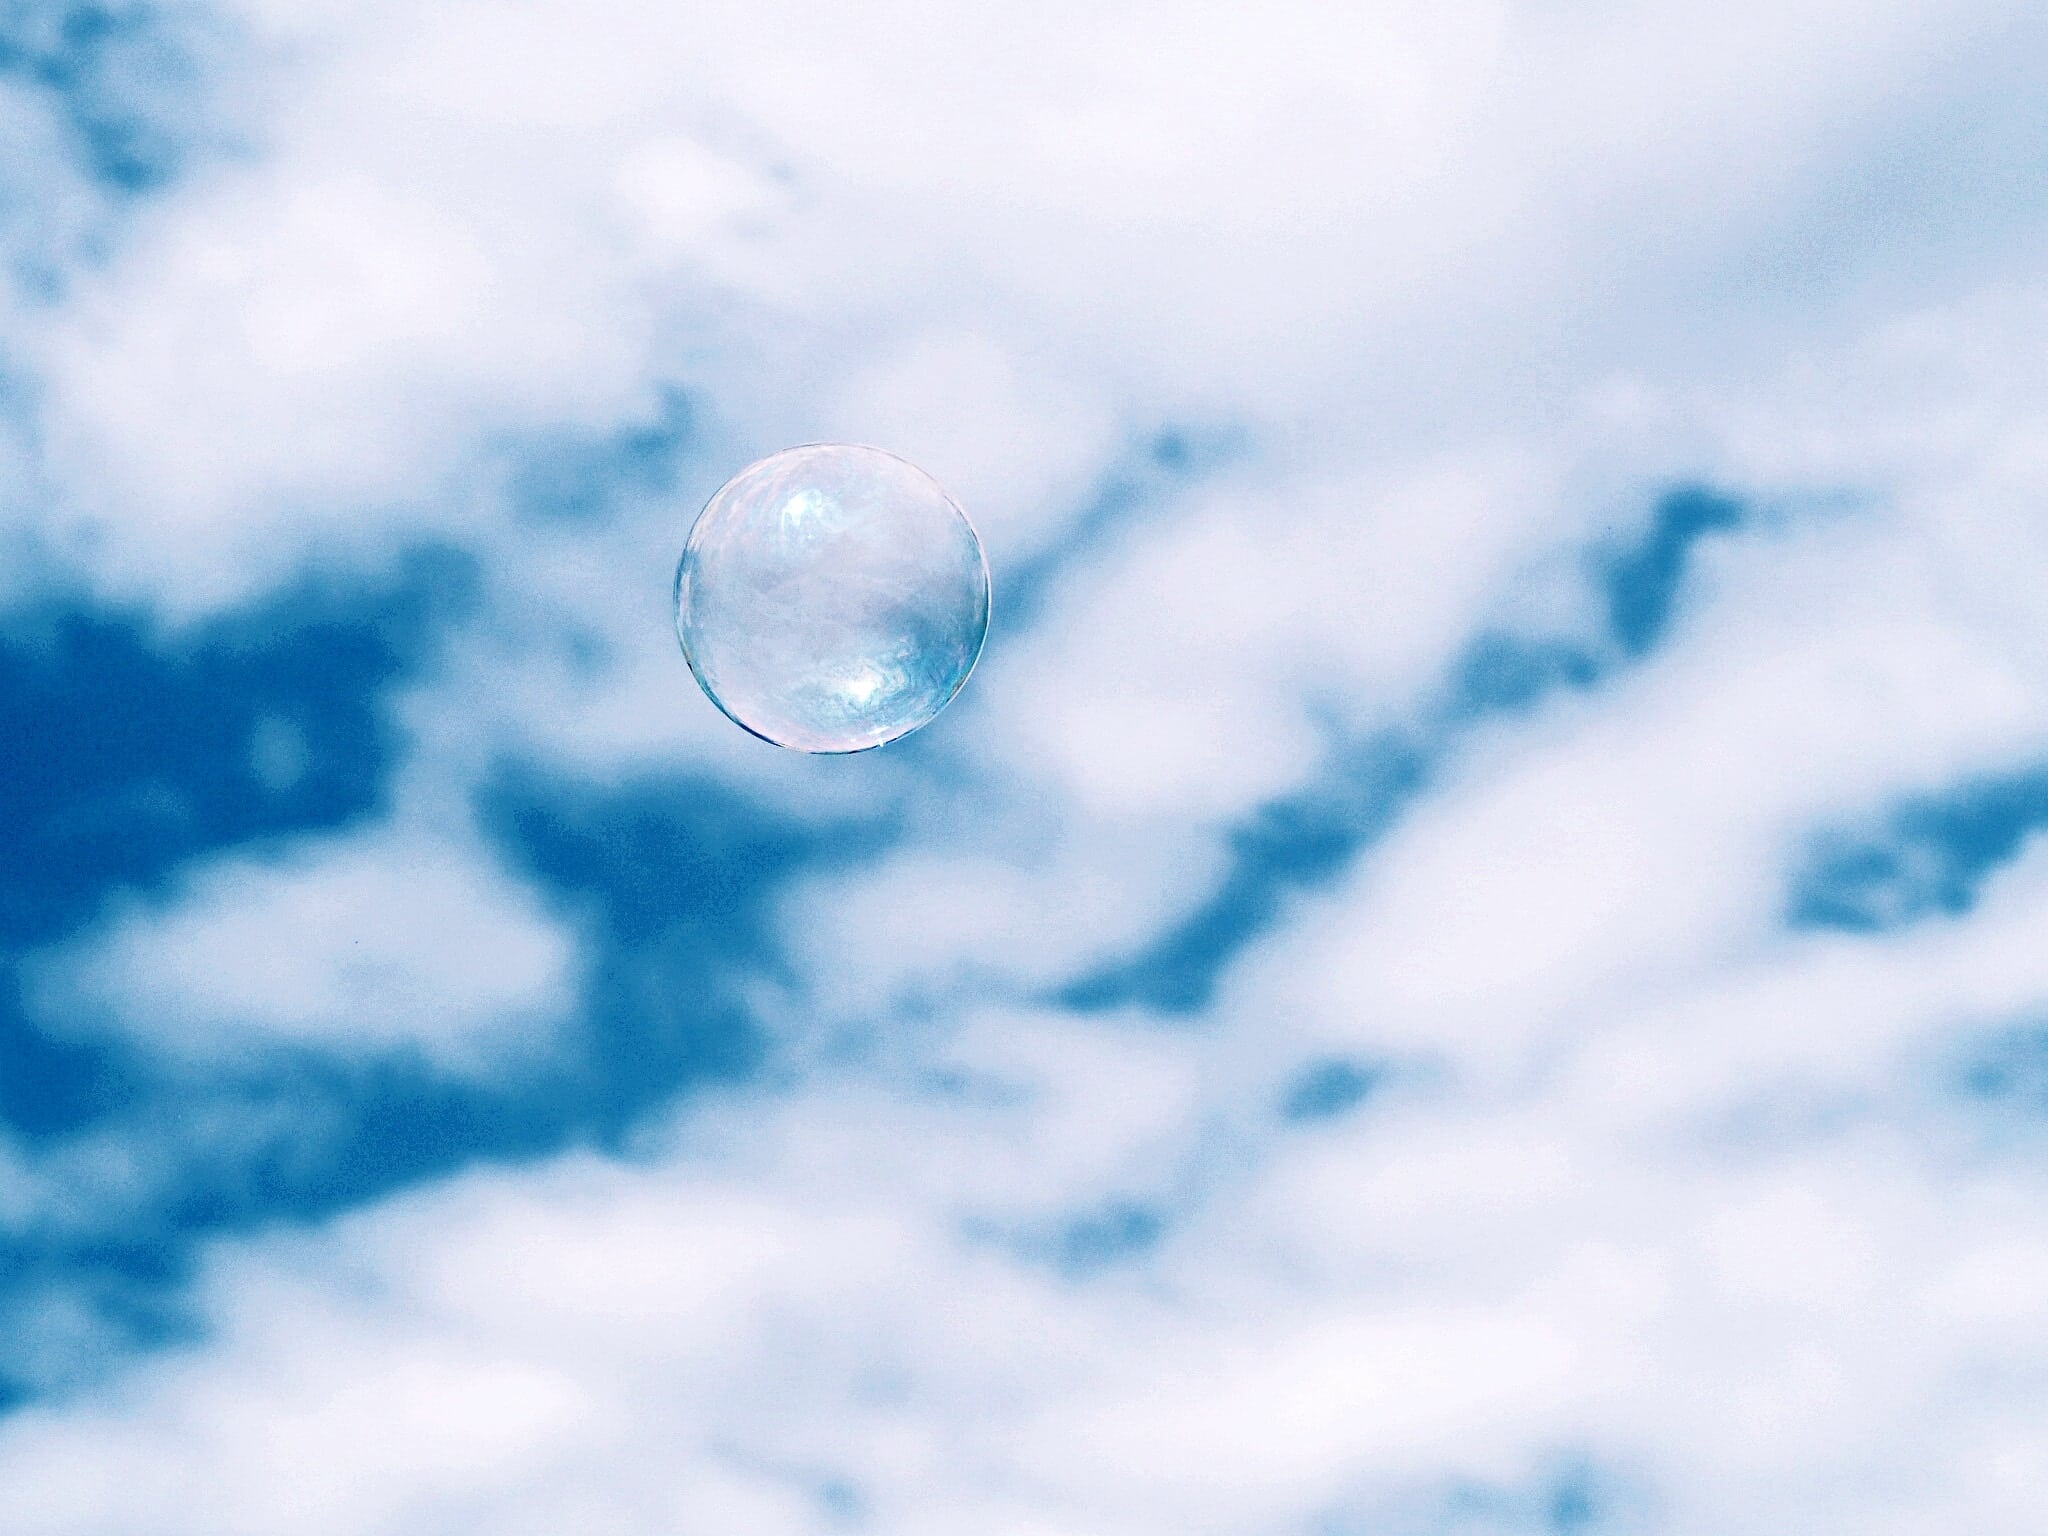 single bubble against the sky